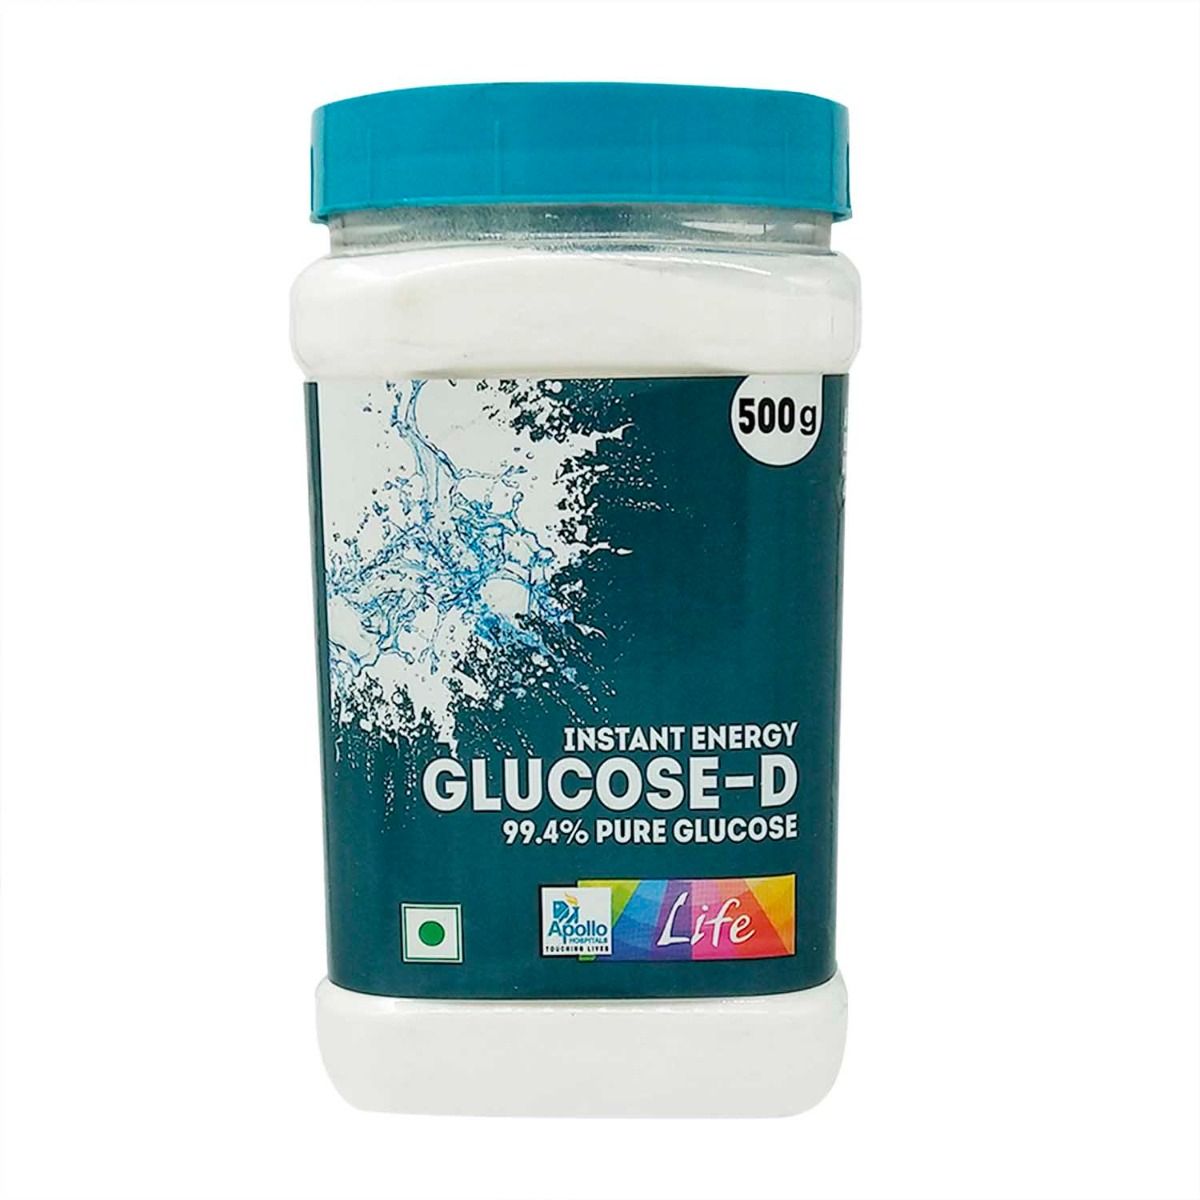 Buy Apollo Life Glucose-D Instant Energy Drink, 500 gm Jar Online